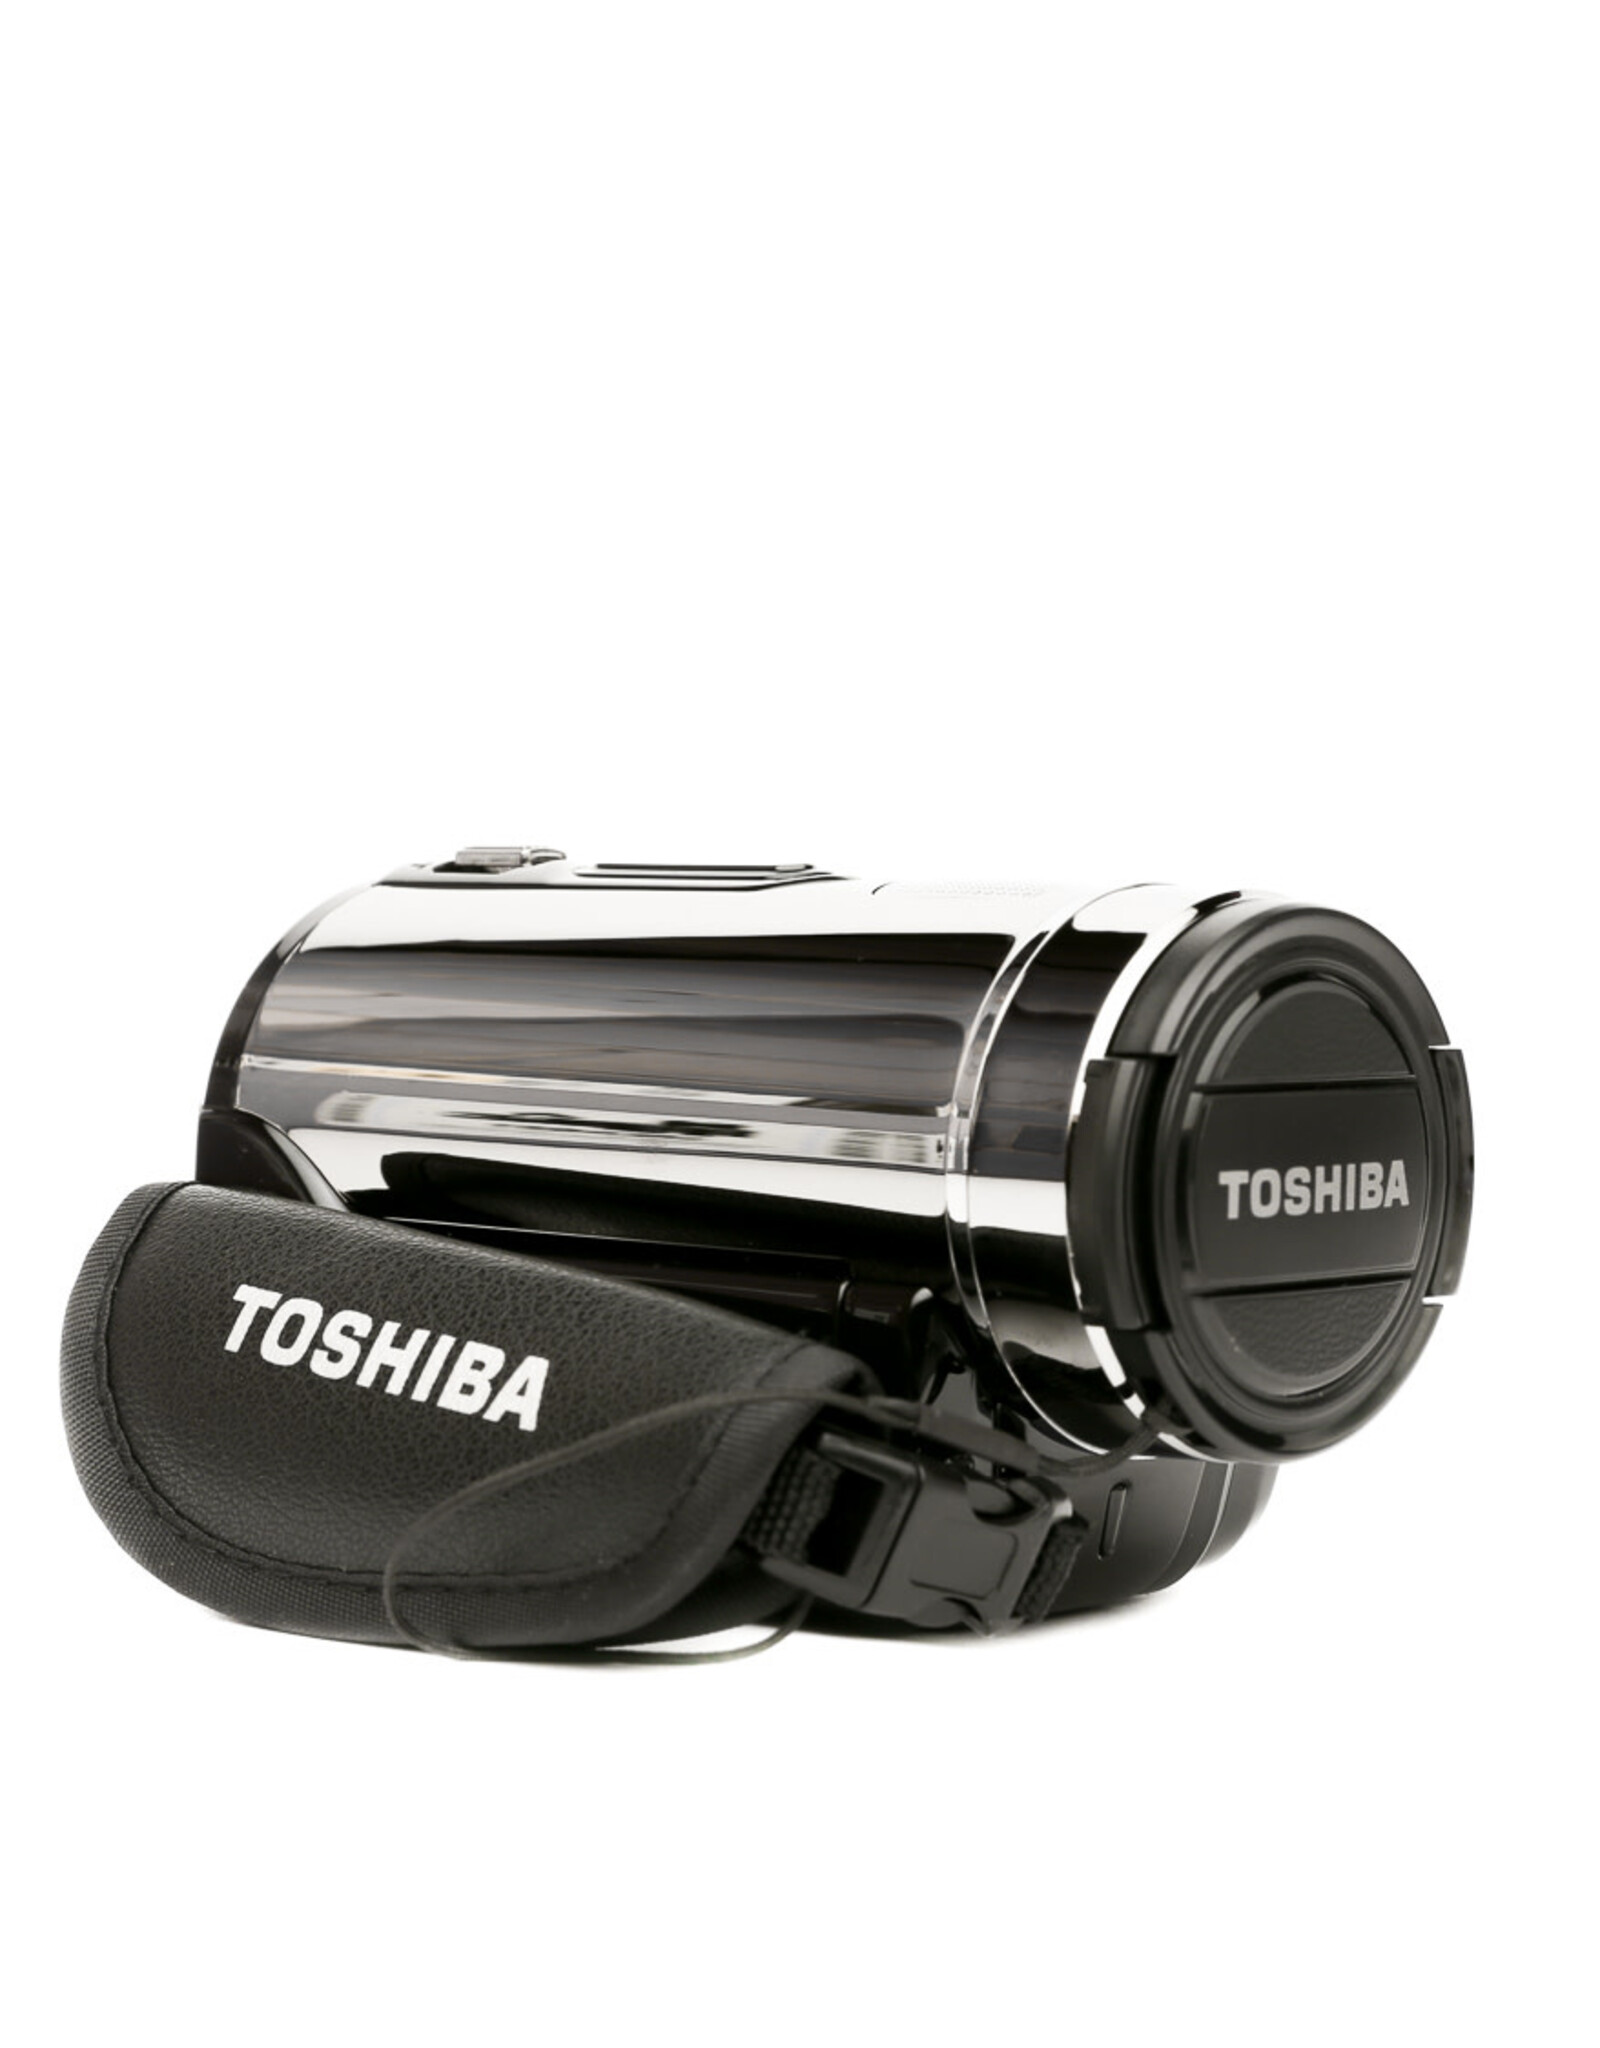 Toshiba Toshiba Camileo X100 HD Camcorder